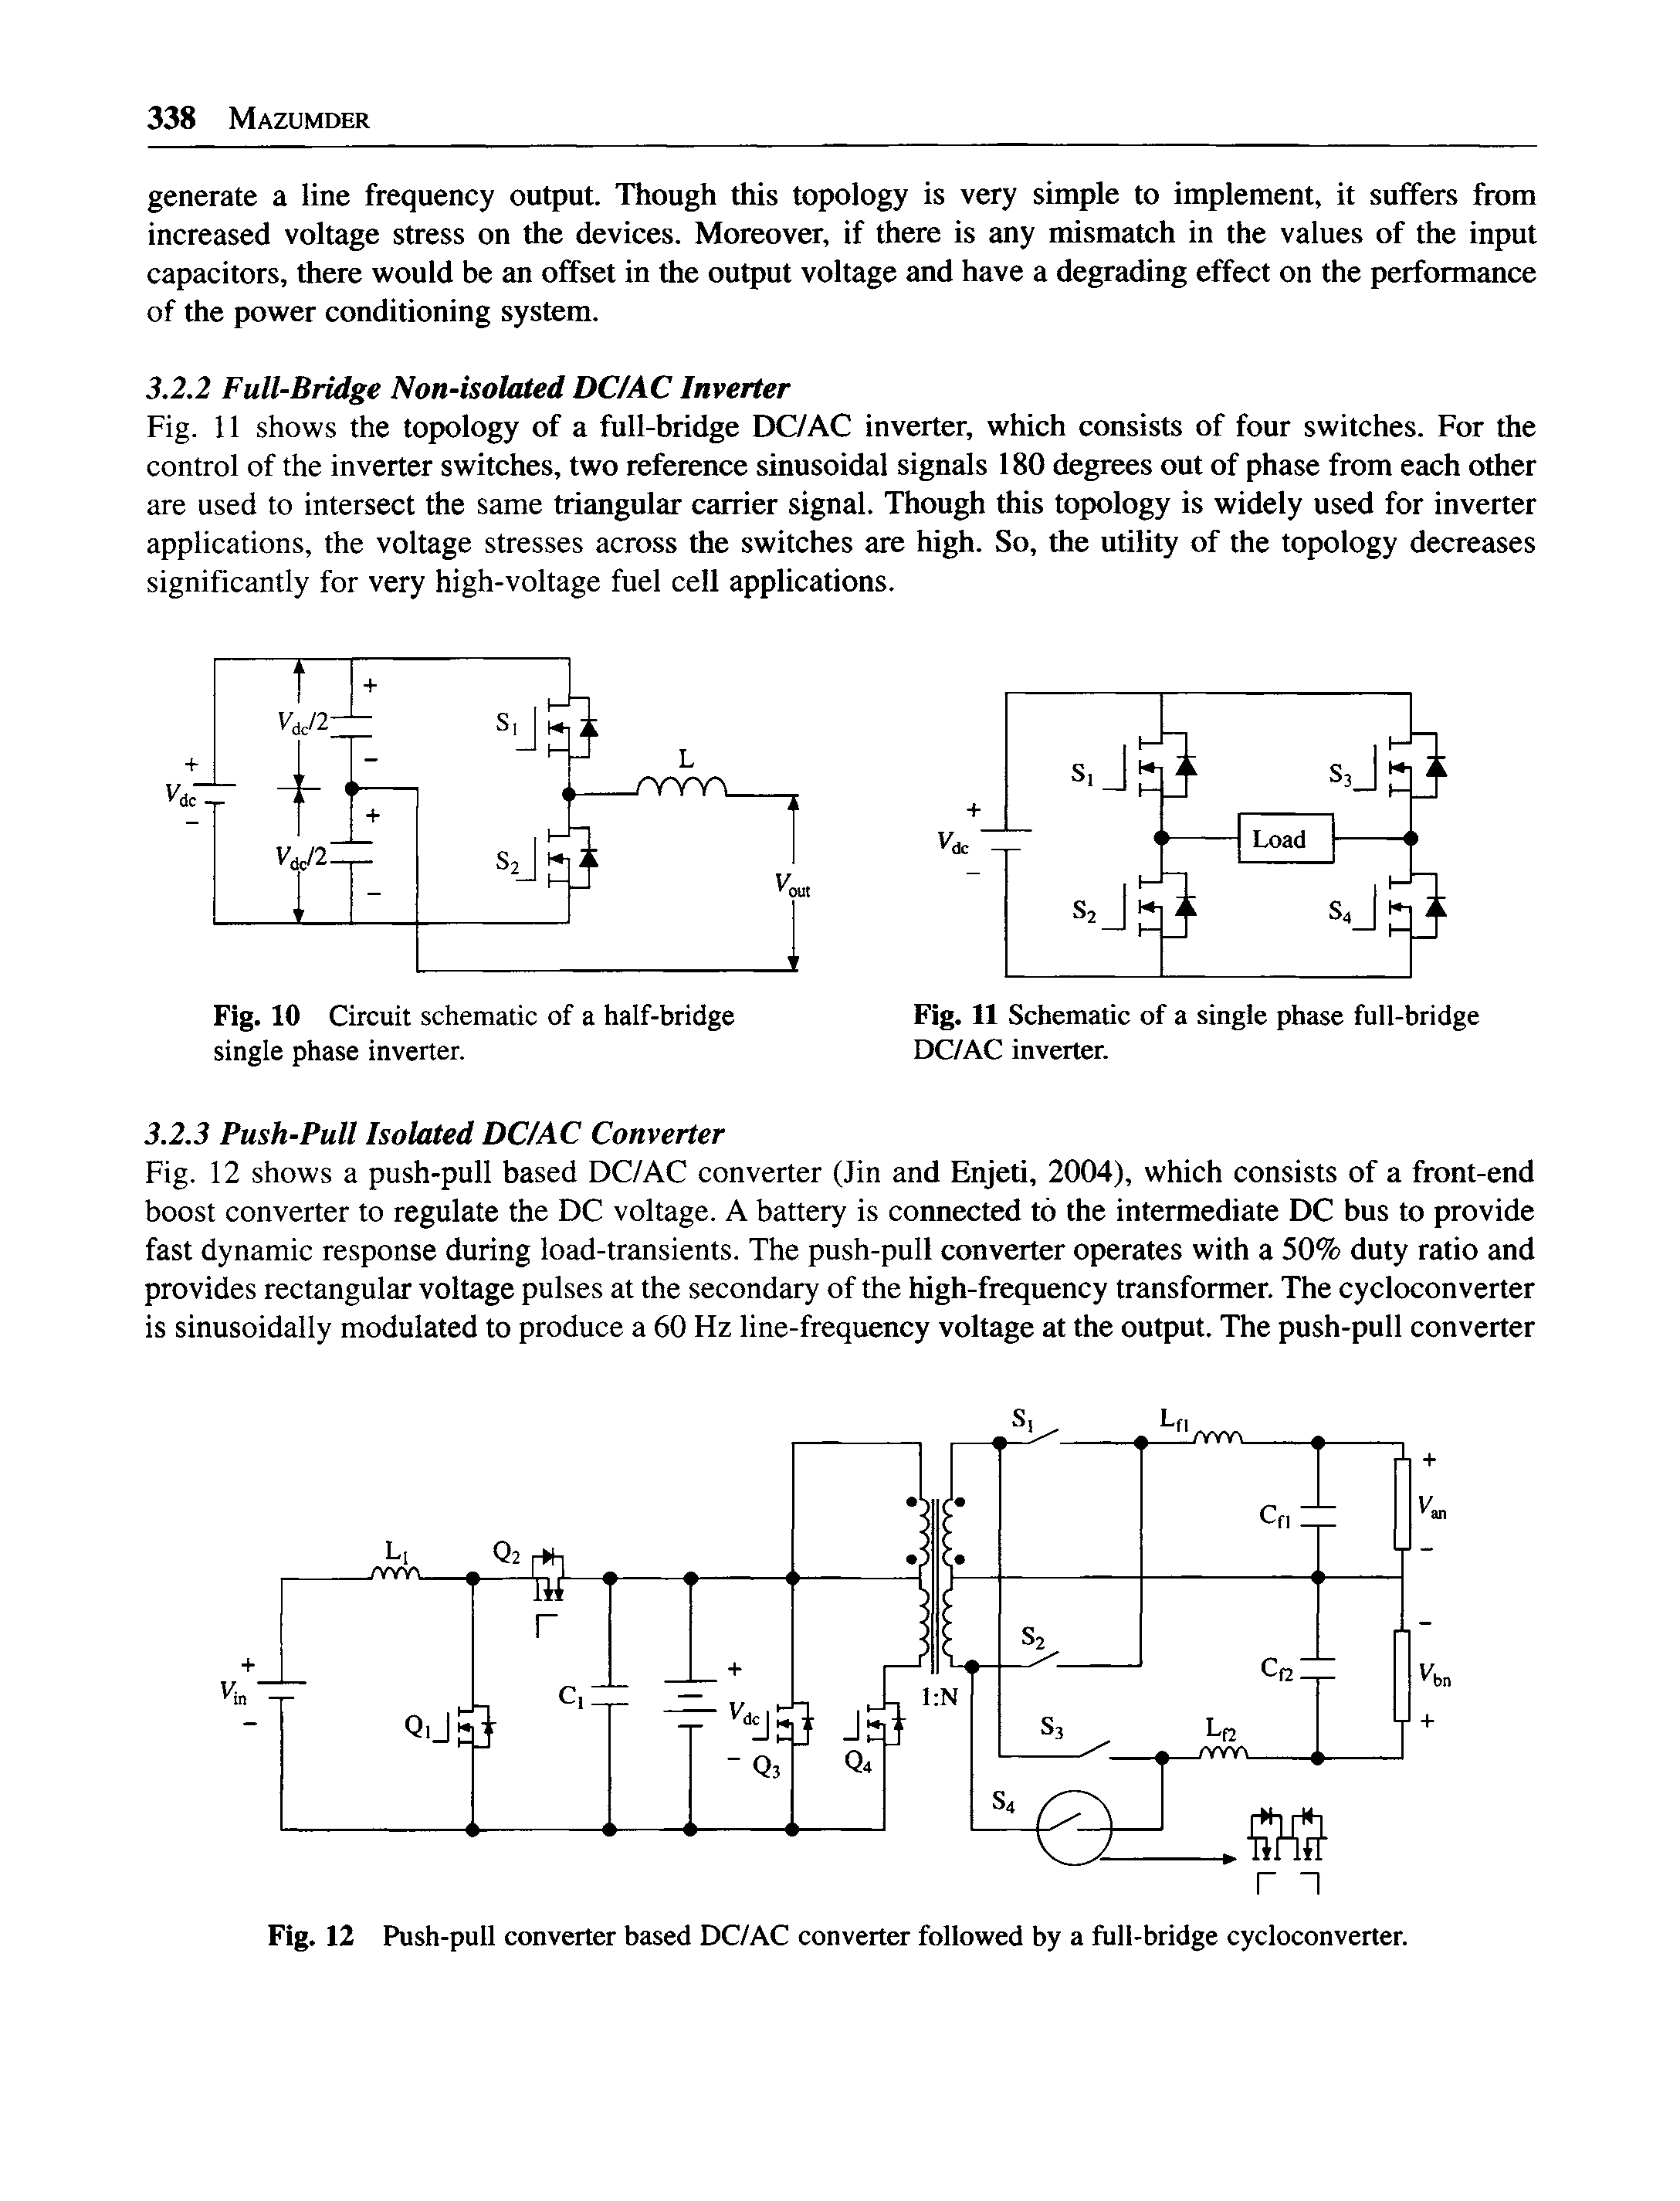 Fig. 12 Push-pull converter based DC/AC converter followed by a full-bridge cycloconverter.